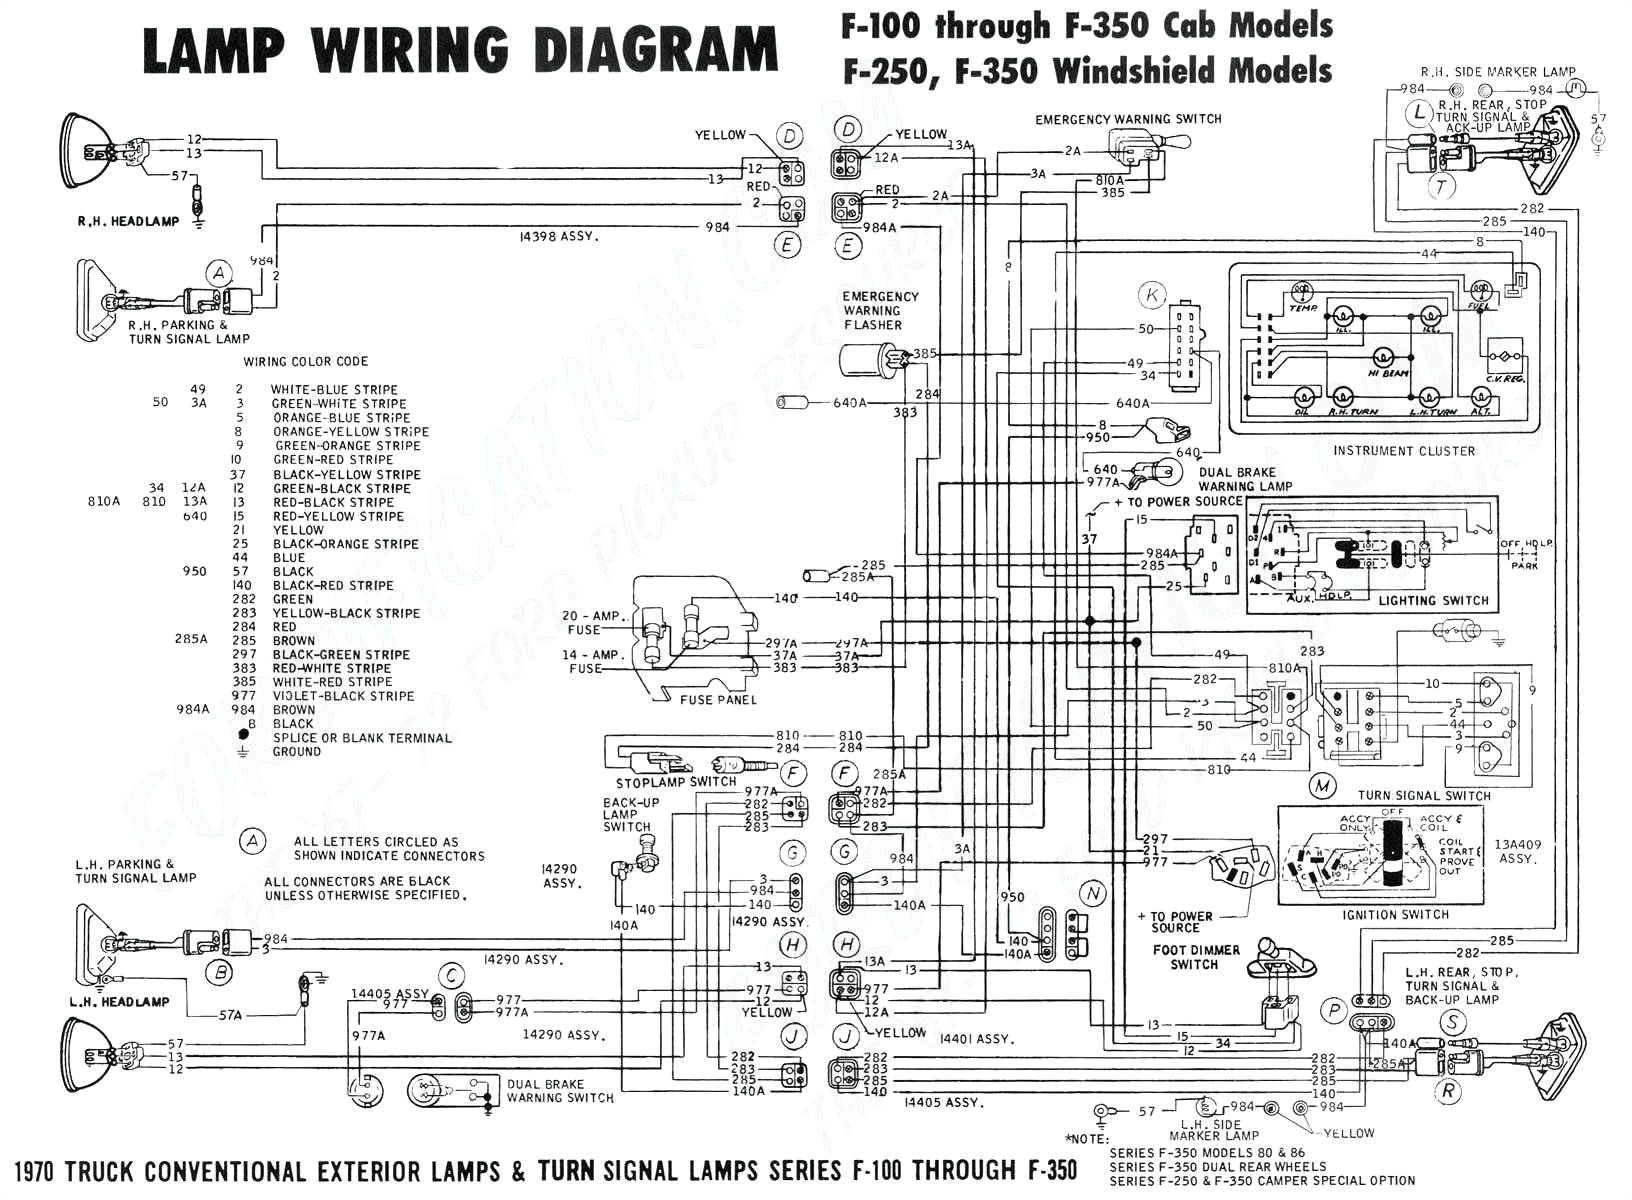 Jensen Wiring Harness Diagram Ouku Wire Harness for Jensen Wiring Diagram View